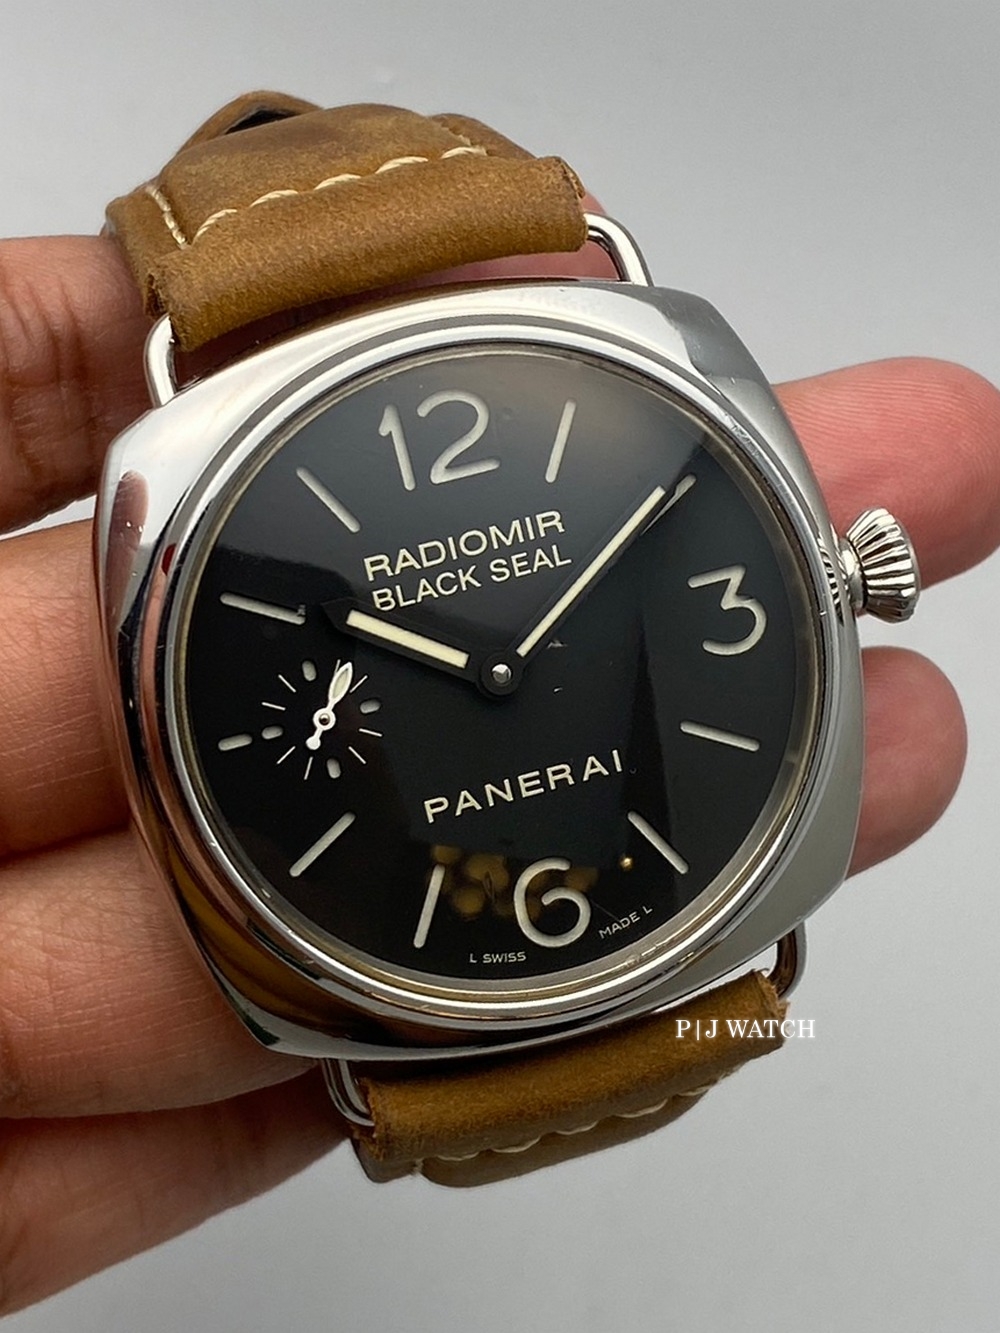 Panerai Radiomir Black Seal Limited Edition Manual-Wind Watch PAM00183